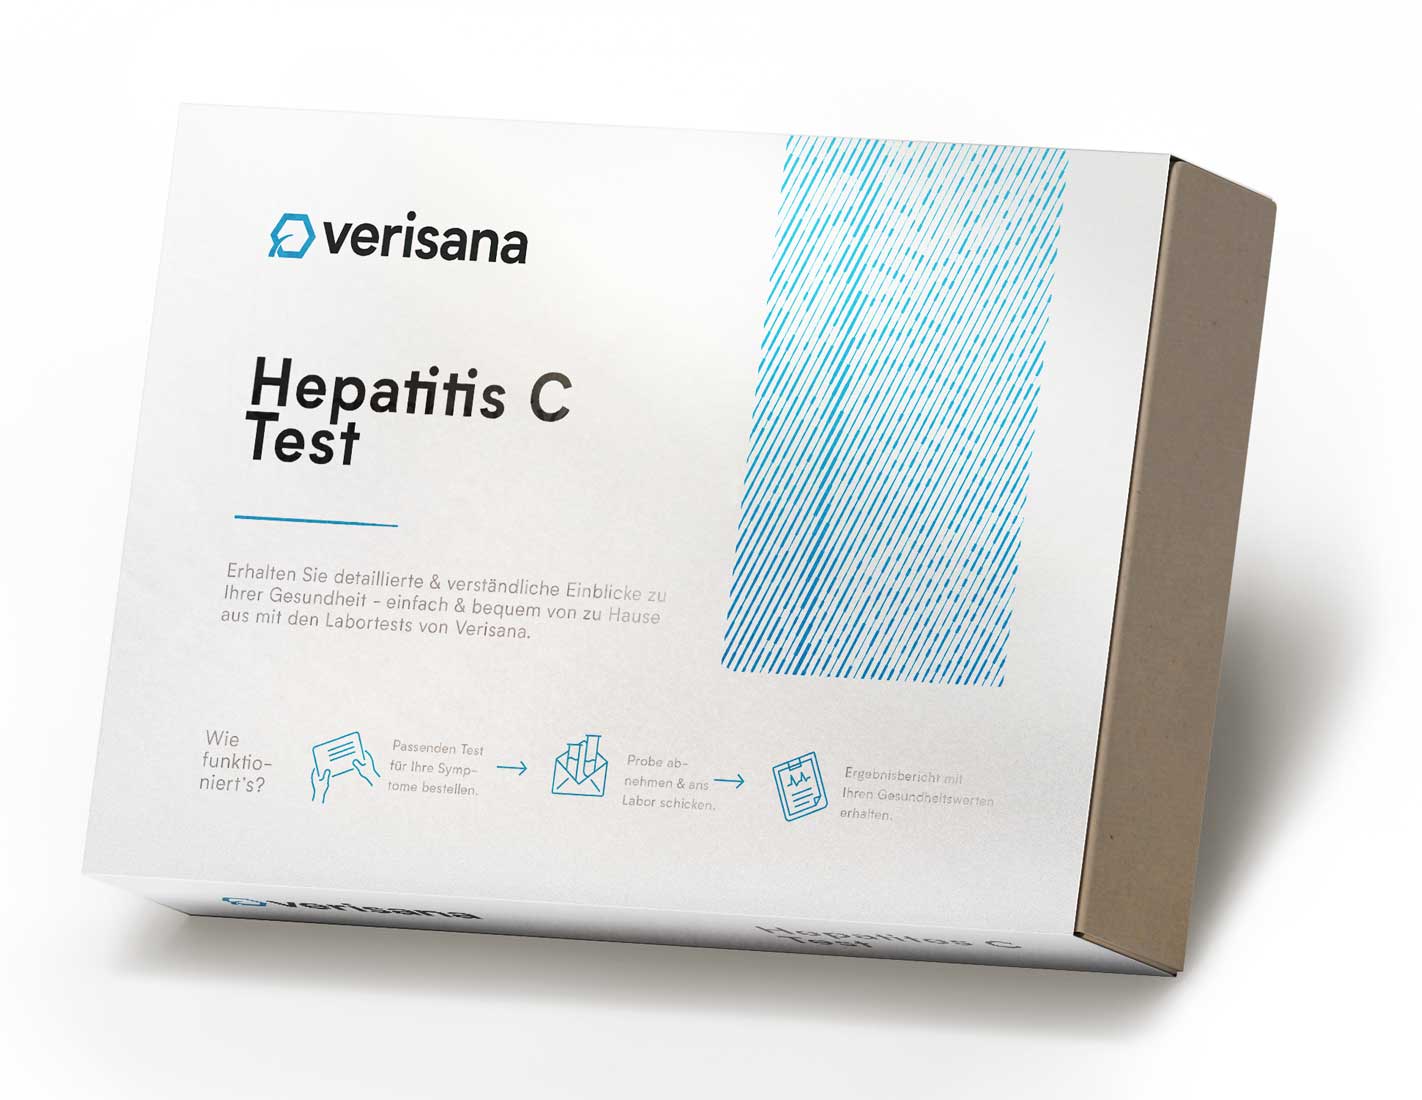 Hepatitis C Test, Blutuntersuchung auf Hepatitis C